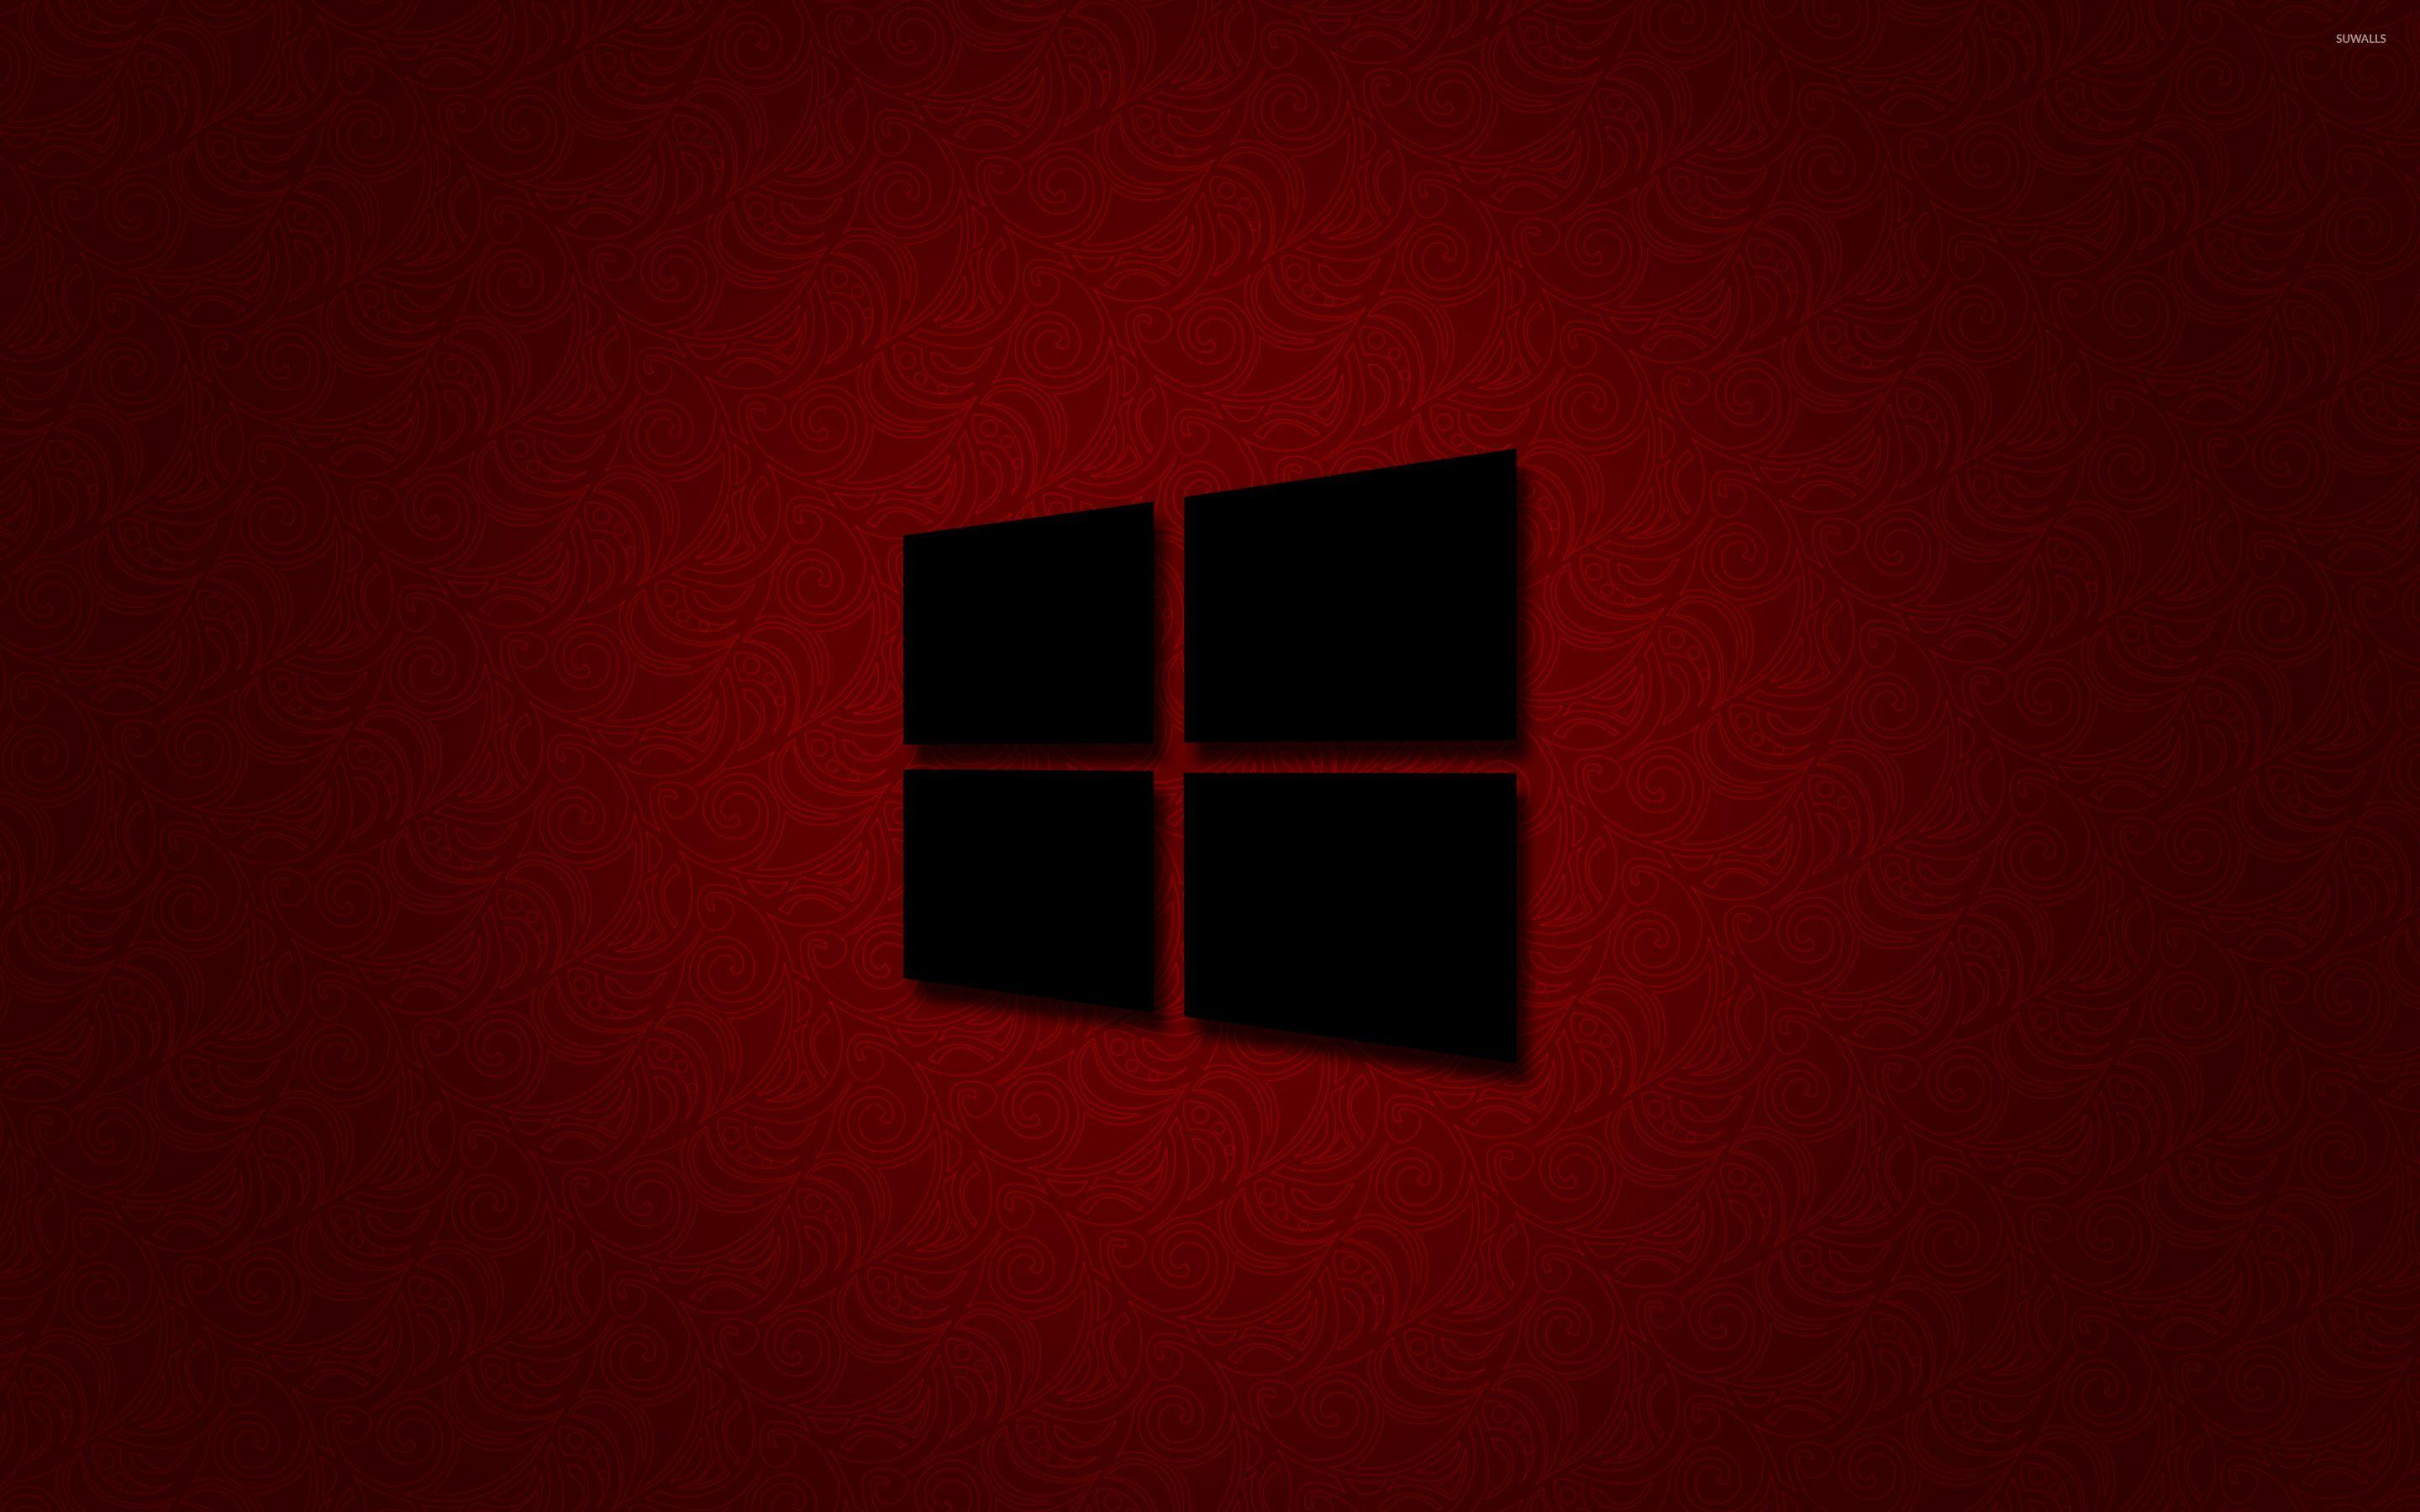 Black Windows 1.0 Logo - Windows 10 black logo on red wallpaper wallpaper